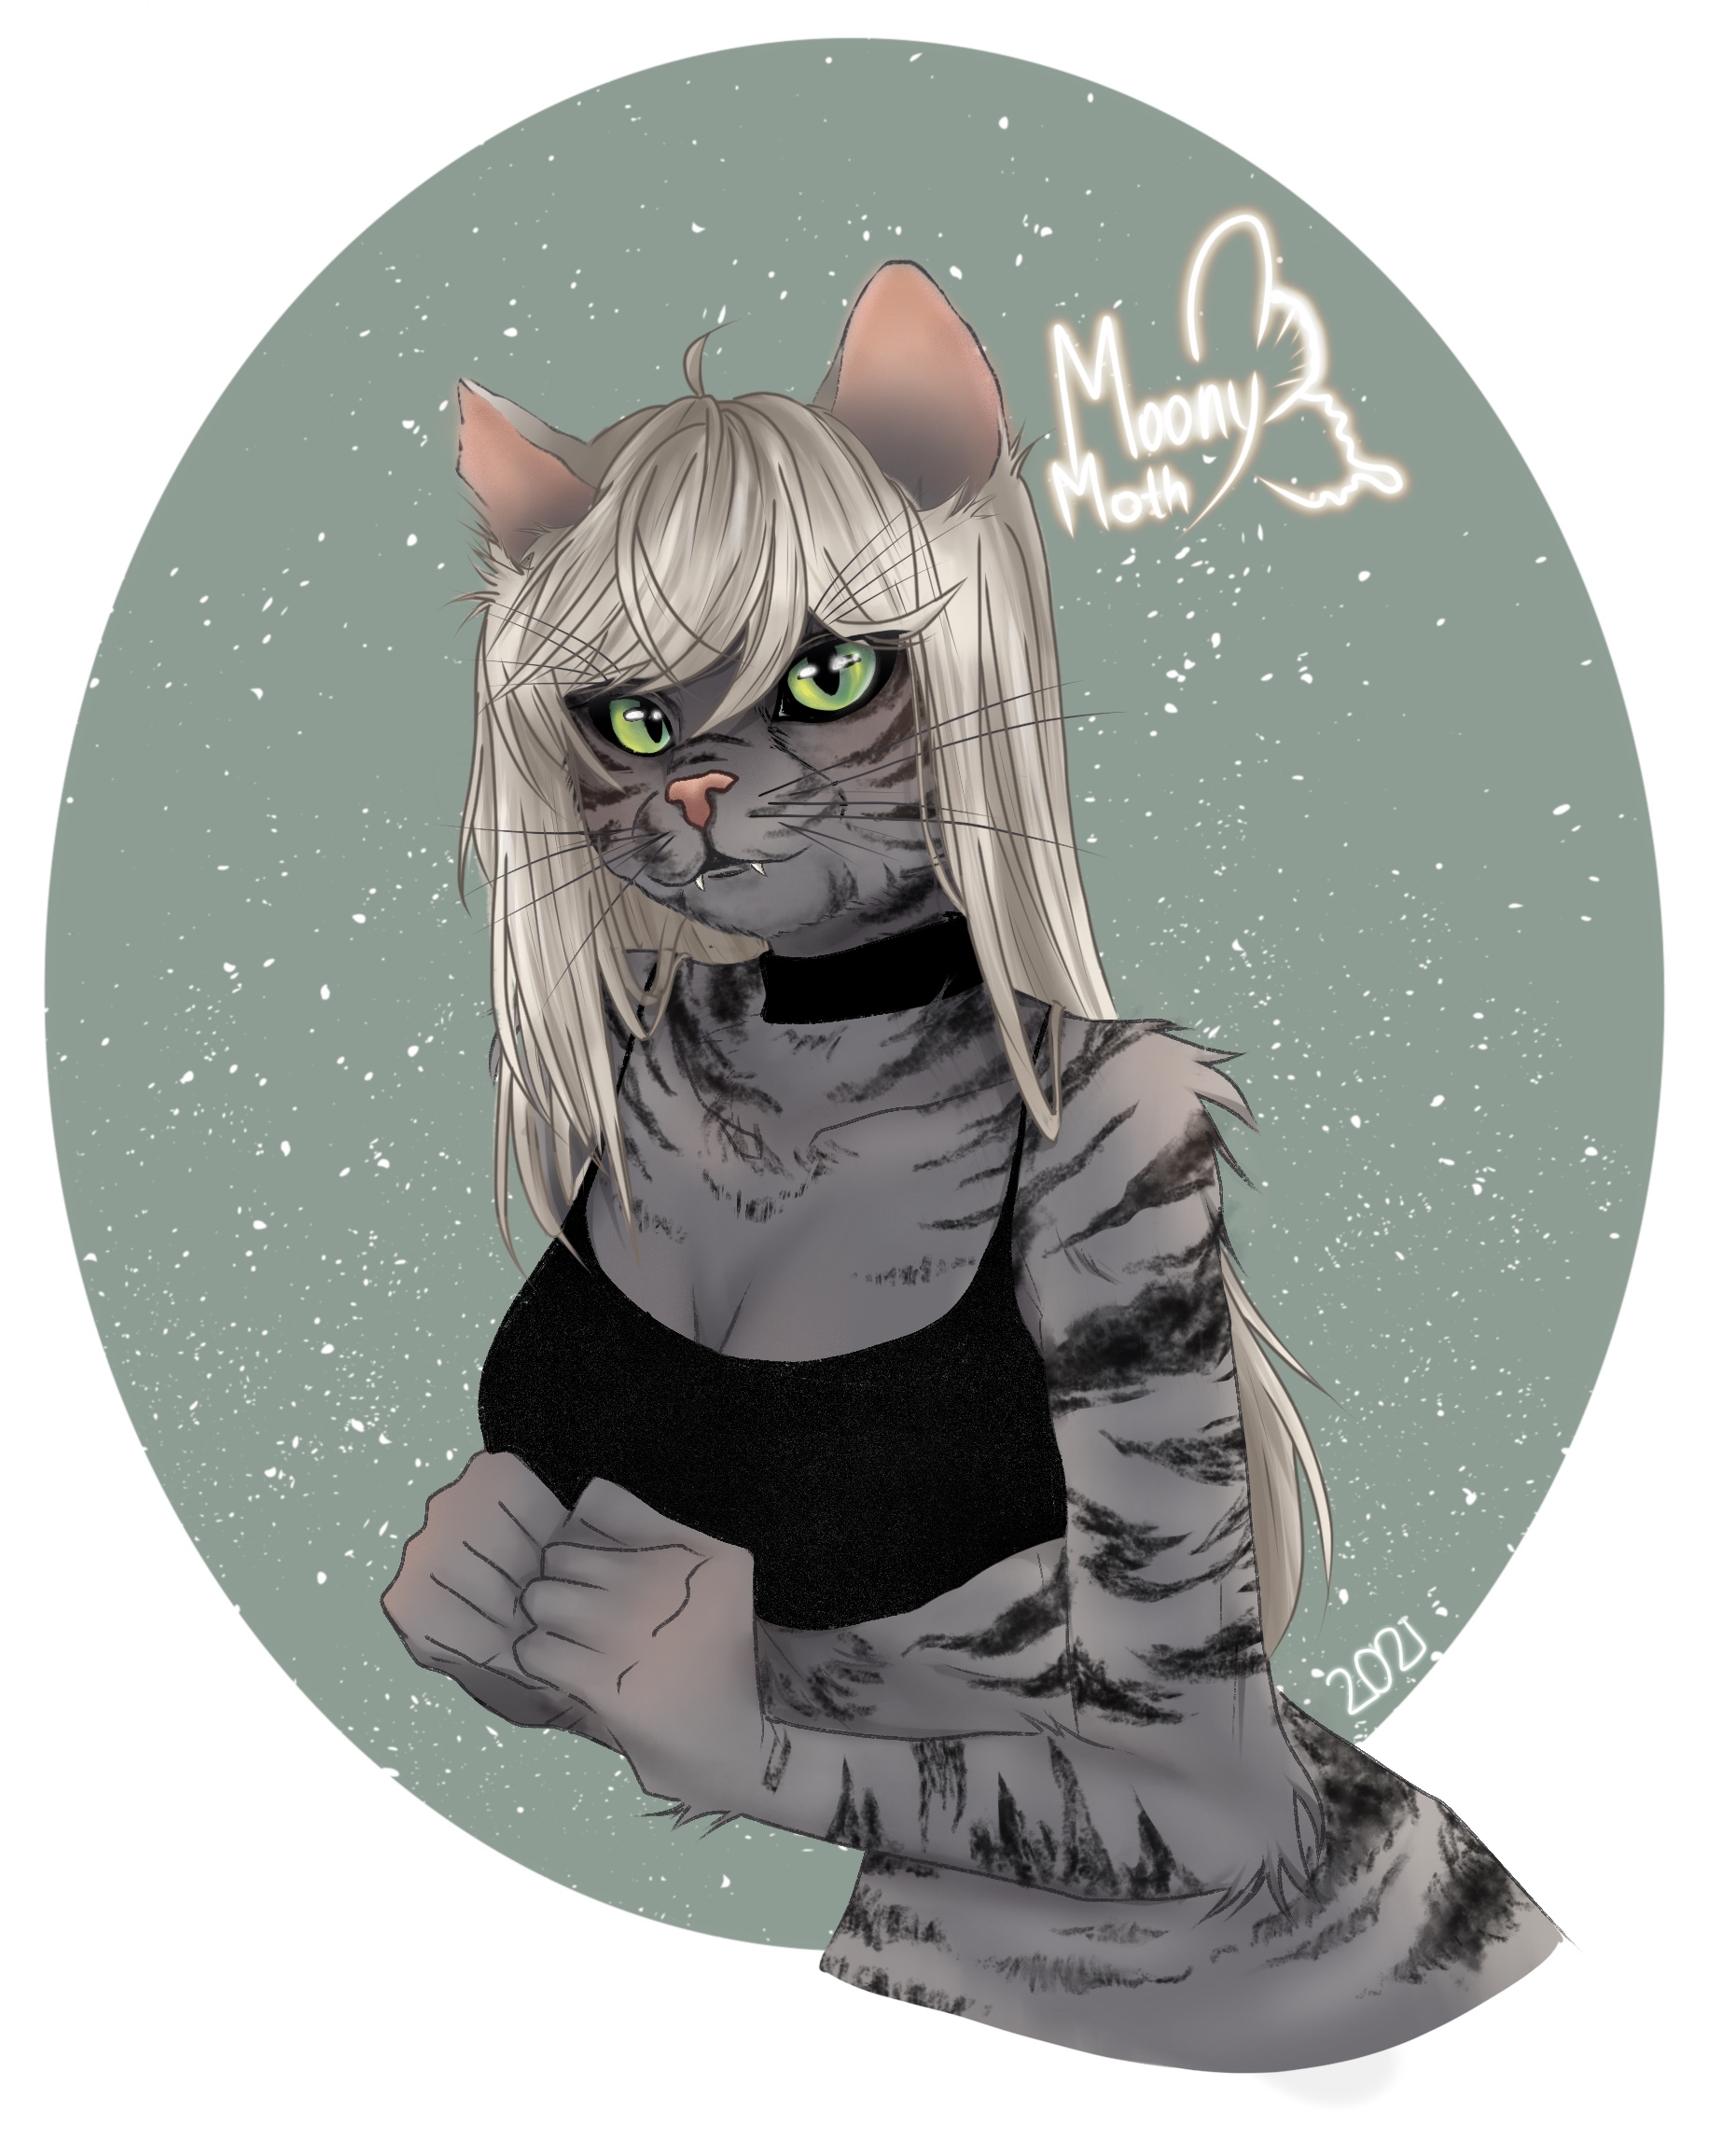 Shy cat girl by MoonyMoth -- Fur Affinity [dot] net